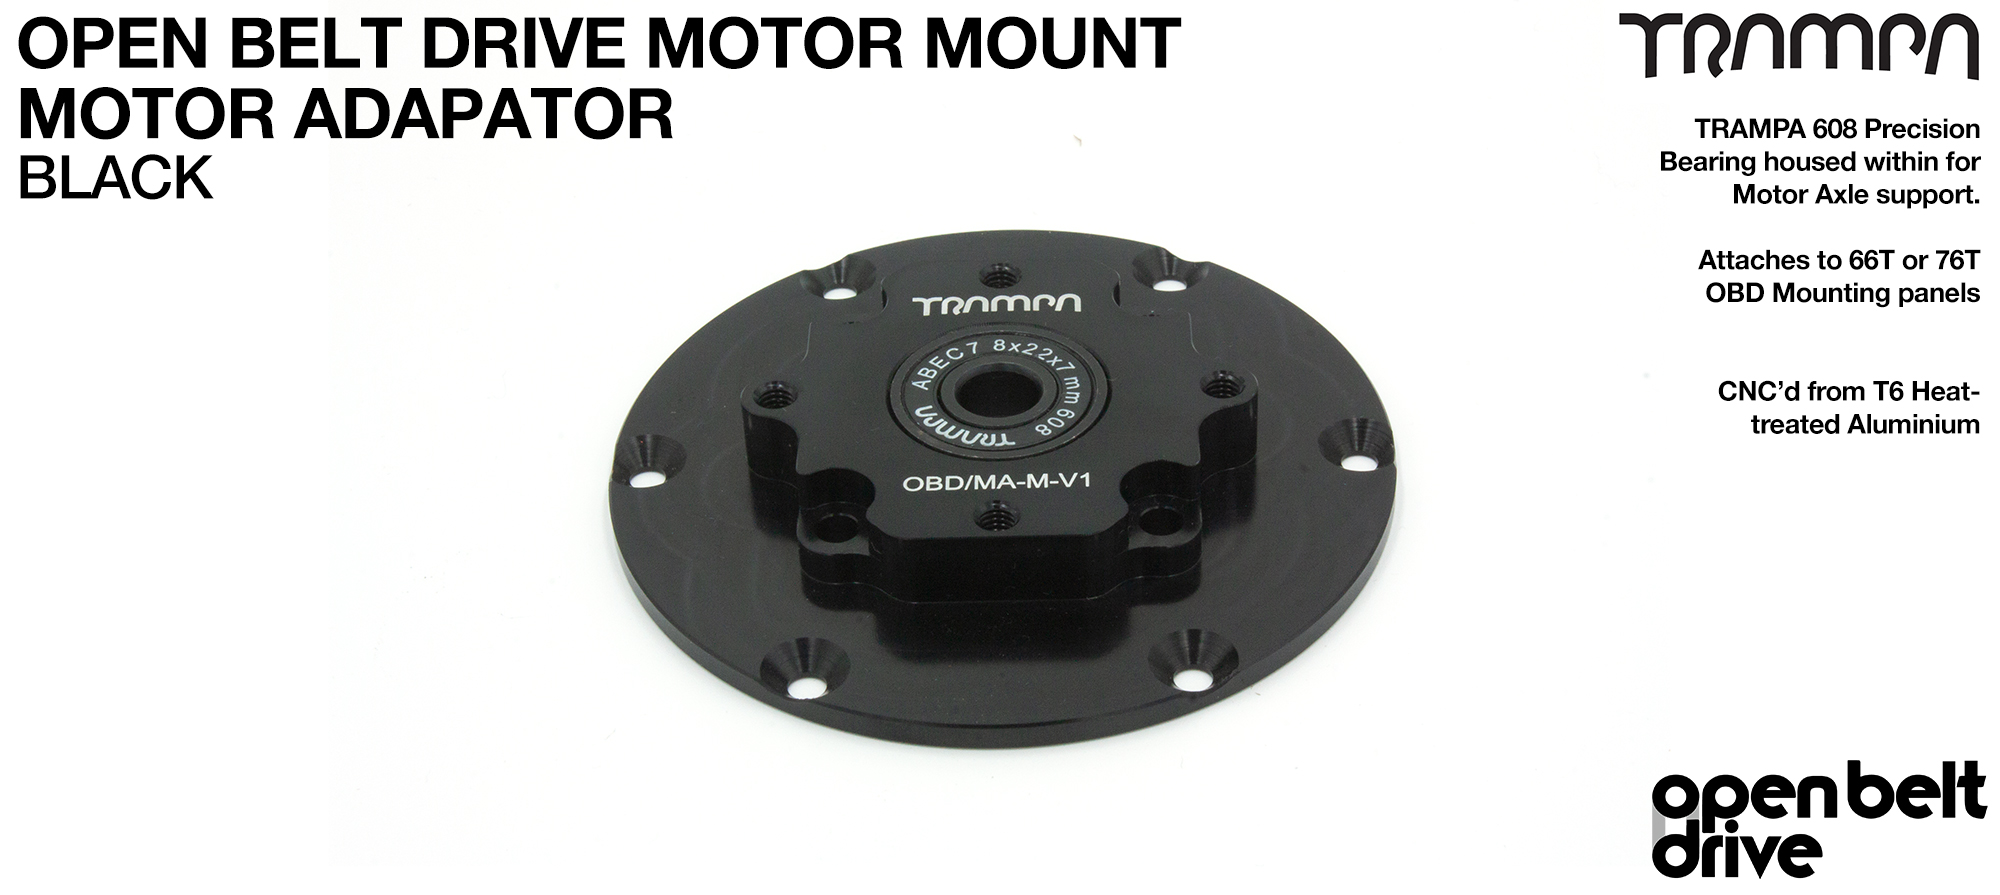 OBD Motor Adaptor with Housed Bearing - BLACK